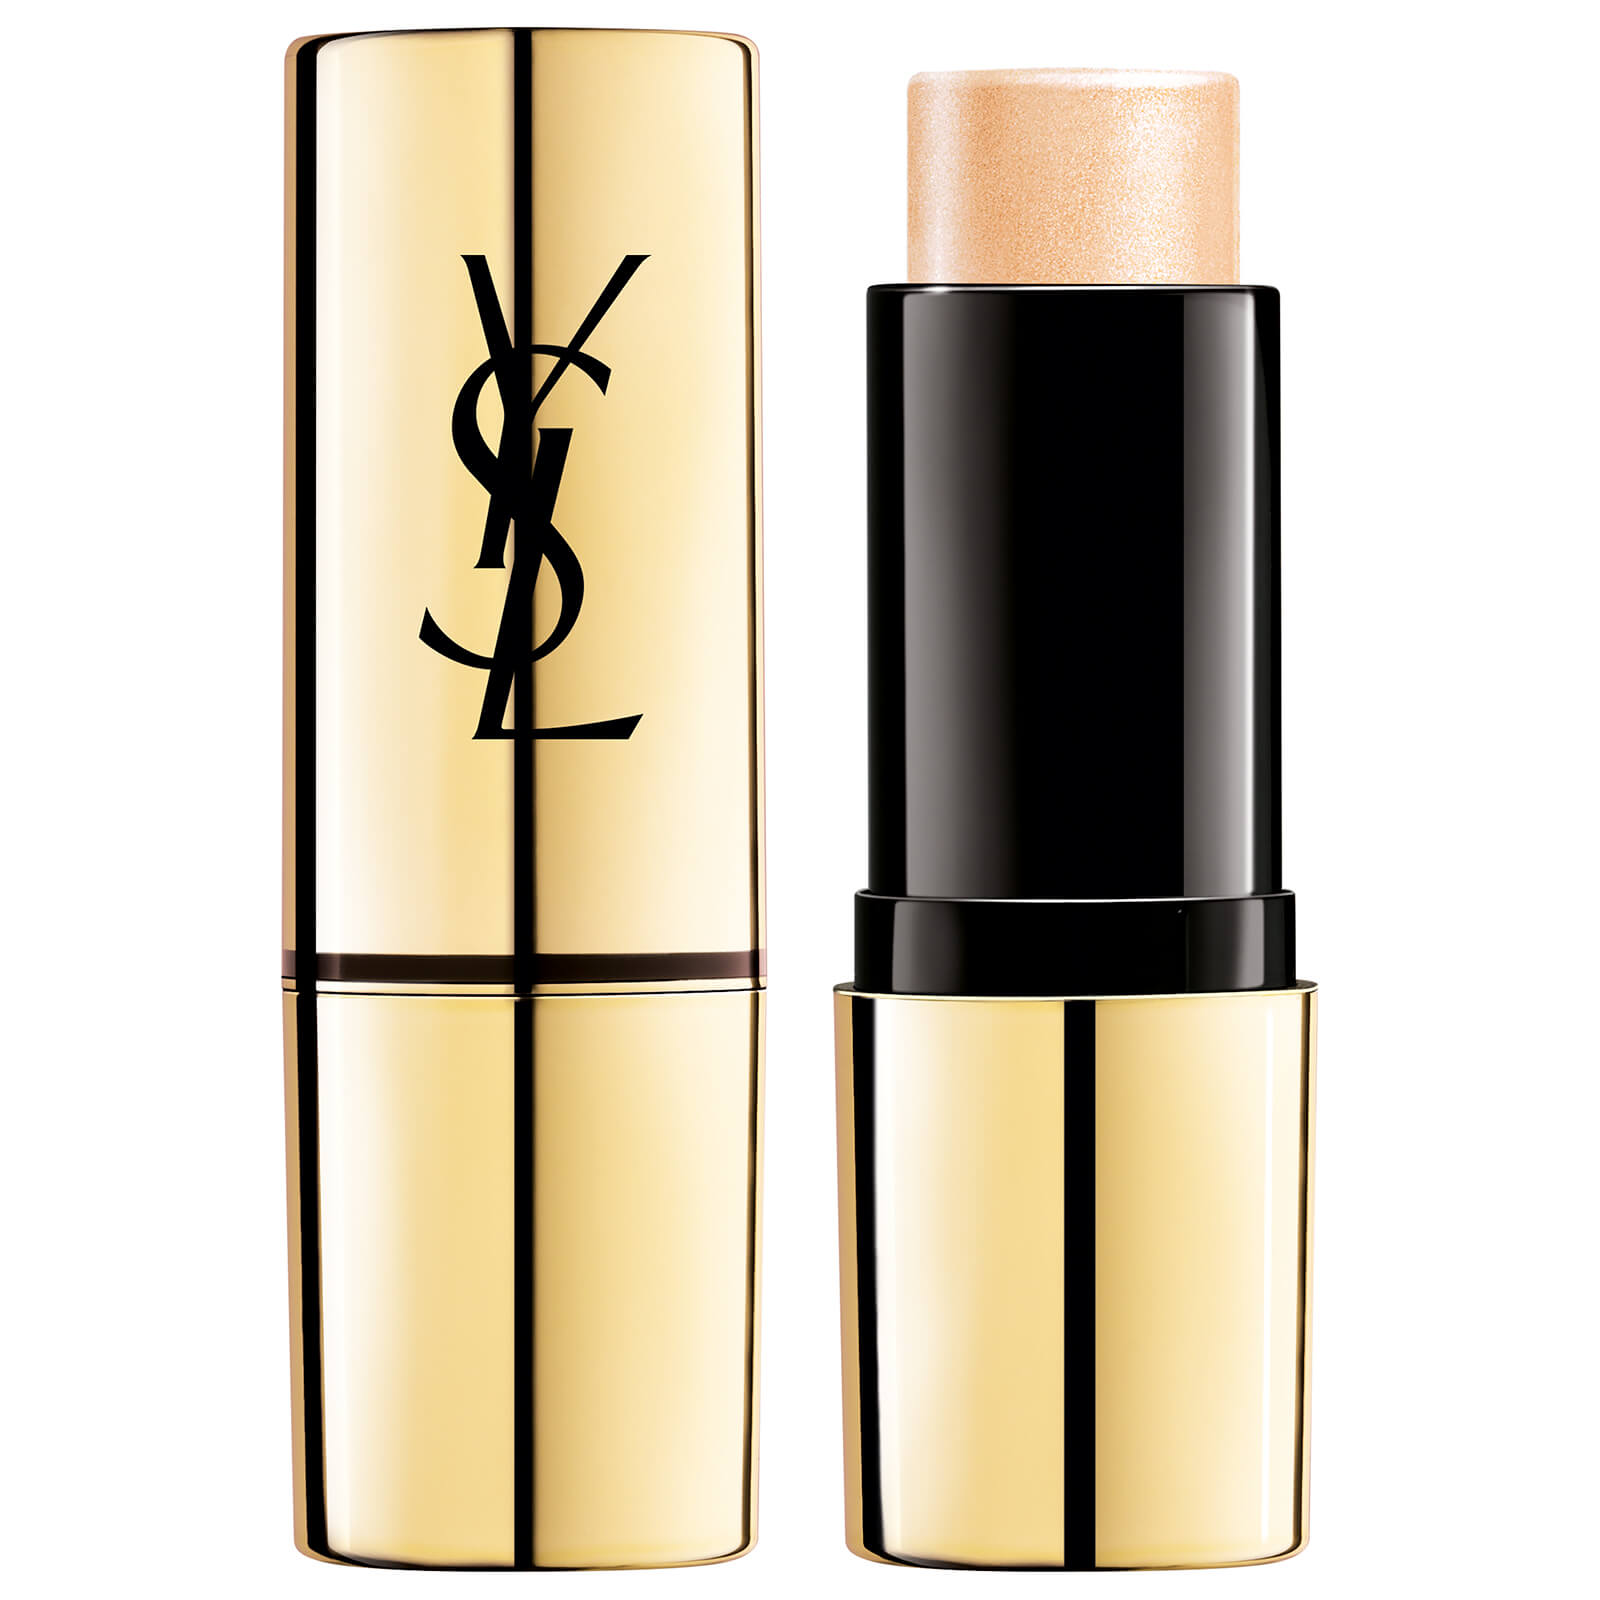 Ysl Yves Saint Laurent Touche Éclat Shimmer Stick Highlighter 9g (Various Shades) - 1 Light Gold